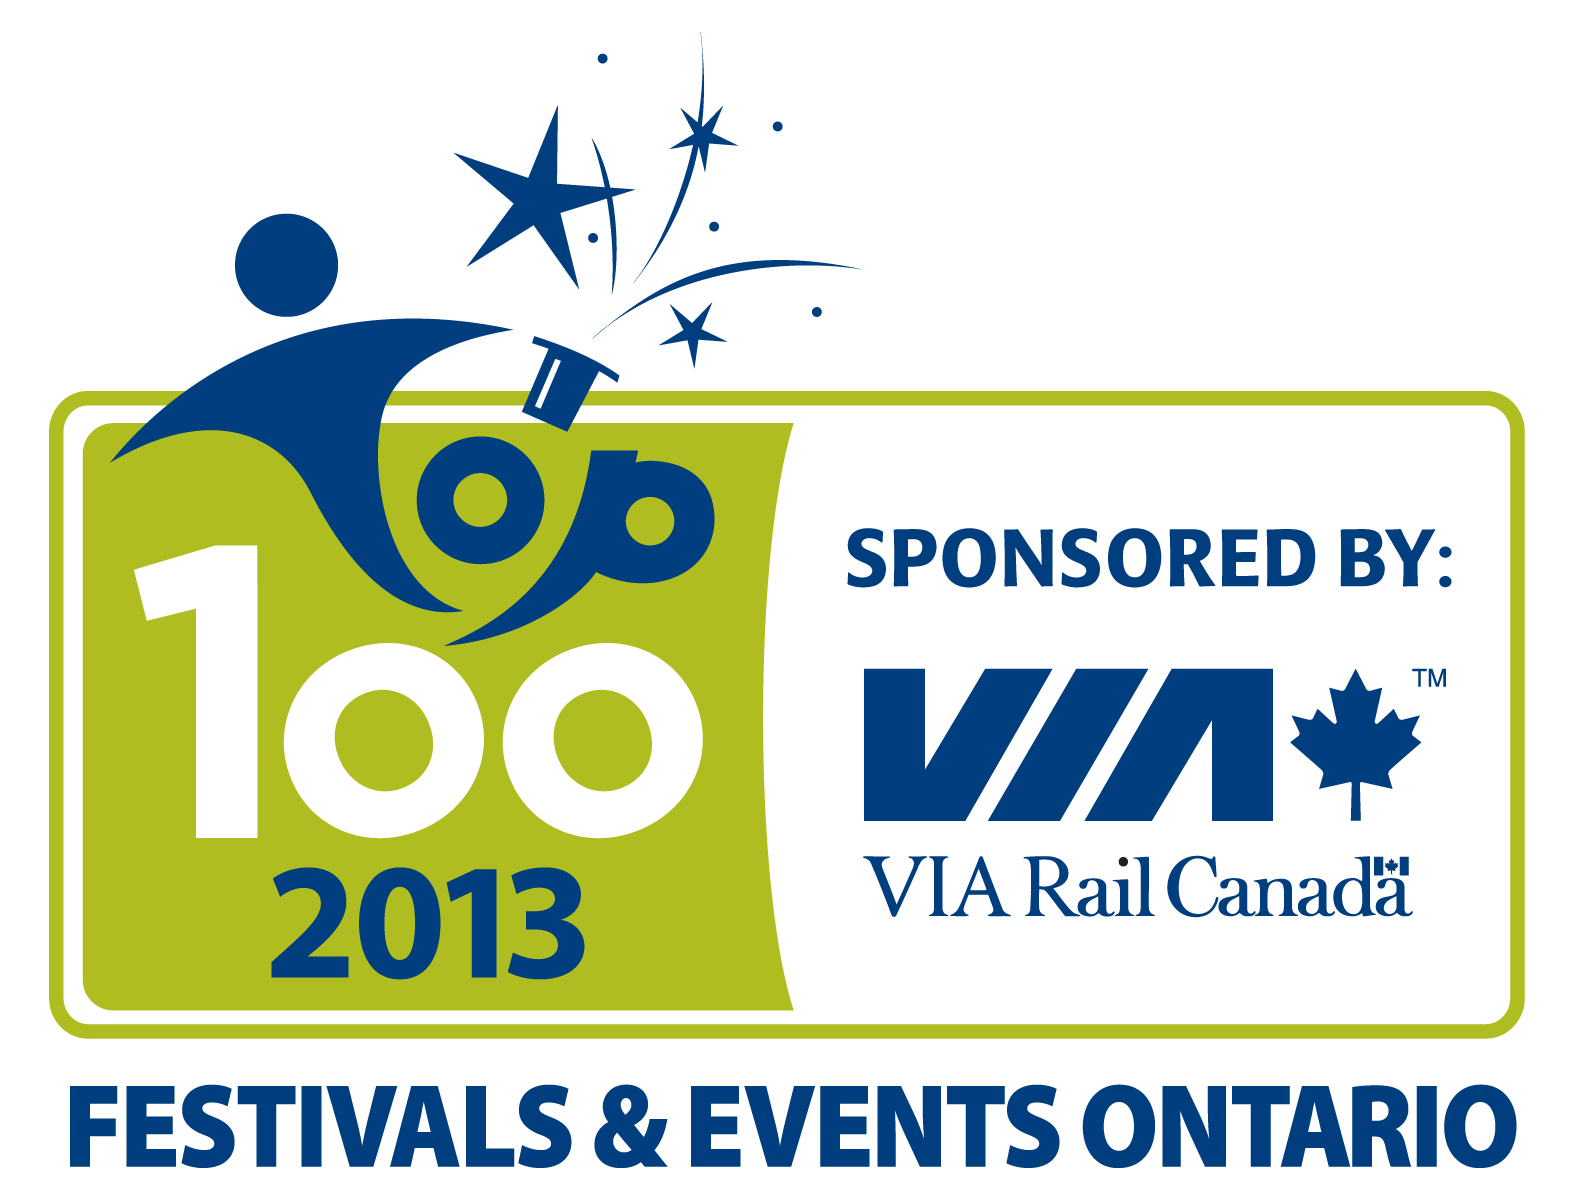 Brantford Villages Festival is in Ontario's Top 100 Festival List